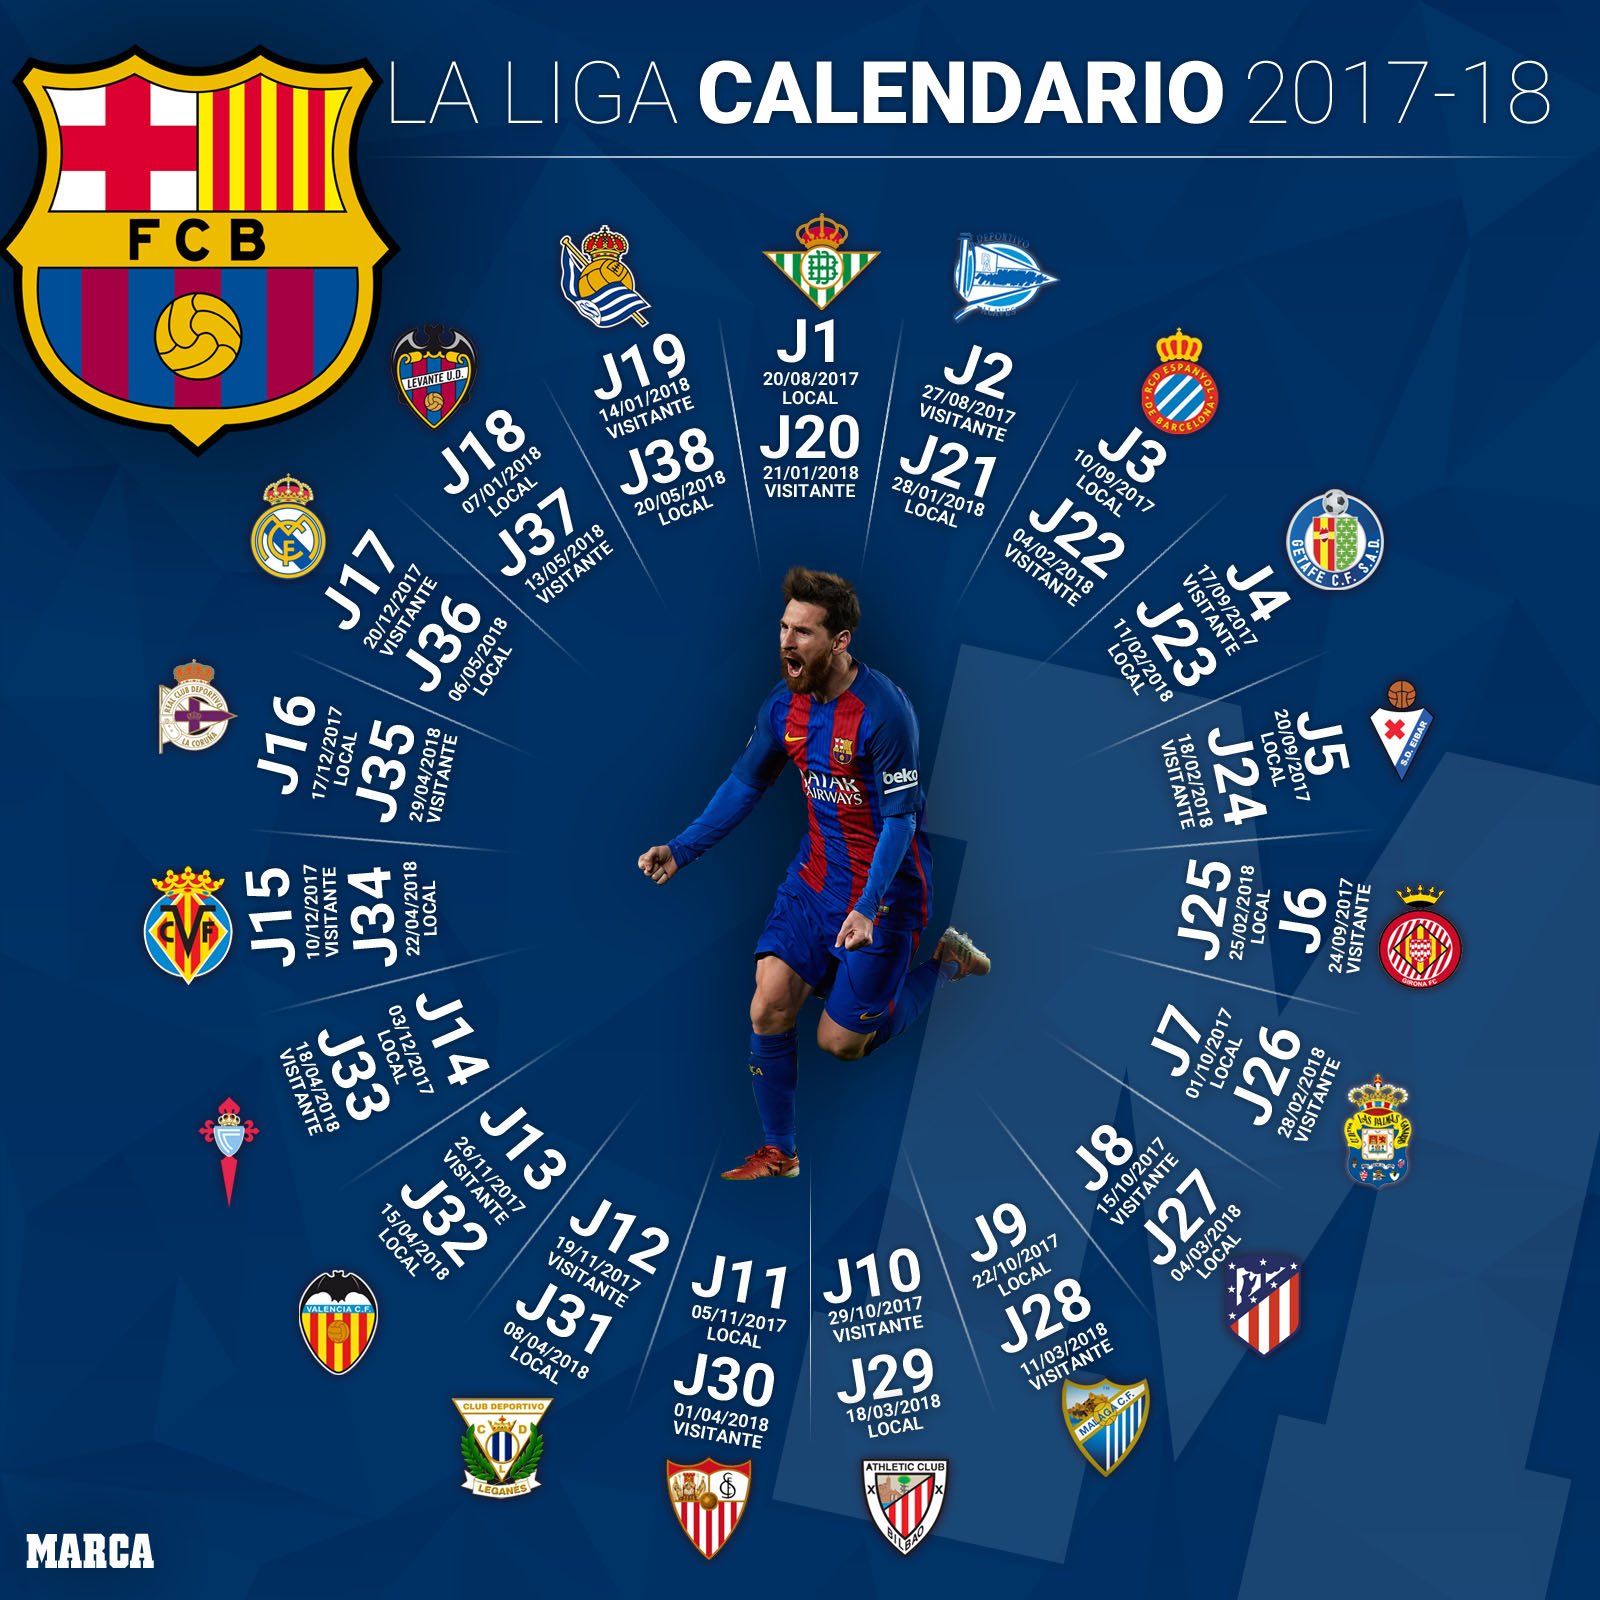 escotilla El camarero Herencia MARCA on Twitter: "📌 El calendario de #LaLiga 2017/18 del Barça 📆  https://t.co/Mbhm9cPsrw #SorteoCalendario https://t.co/vHrWIanOaW" / Twitter